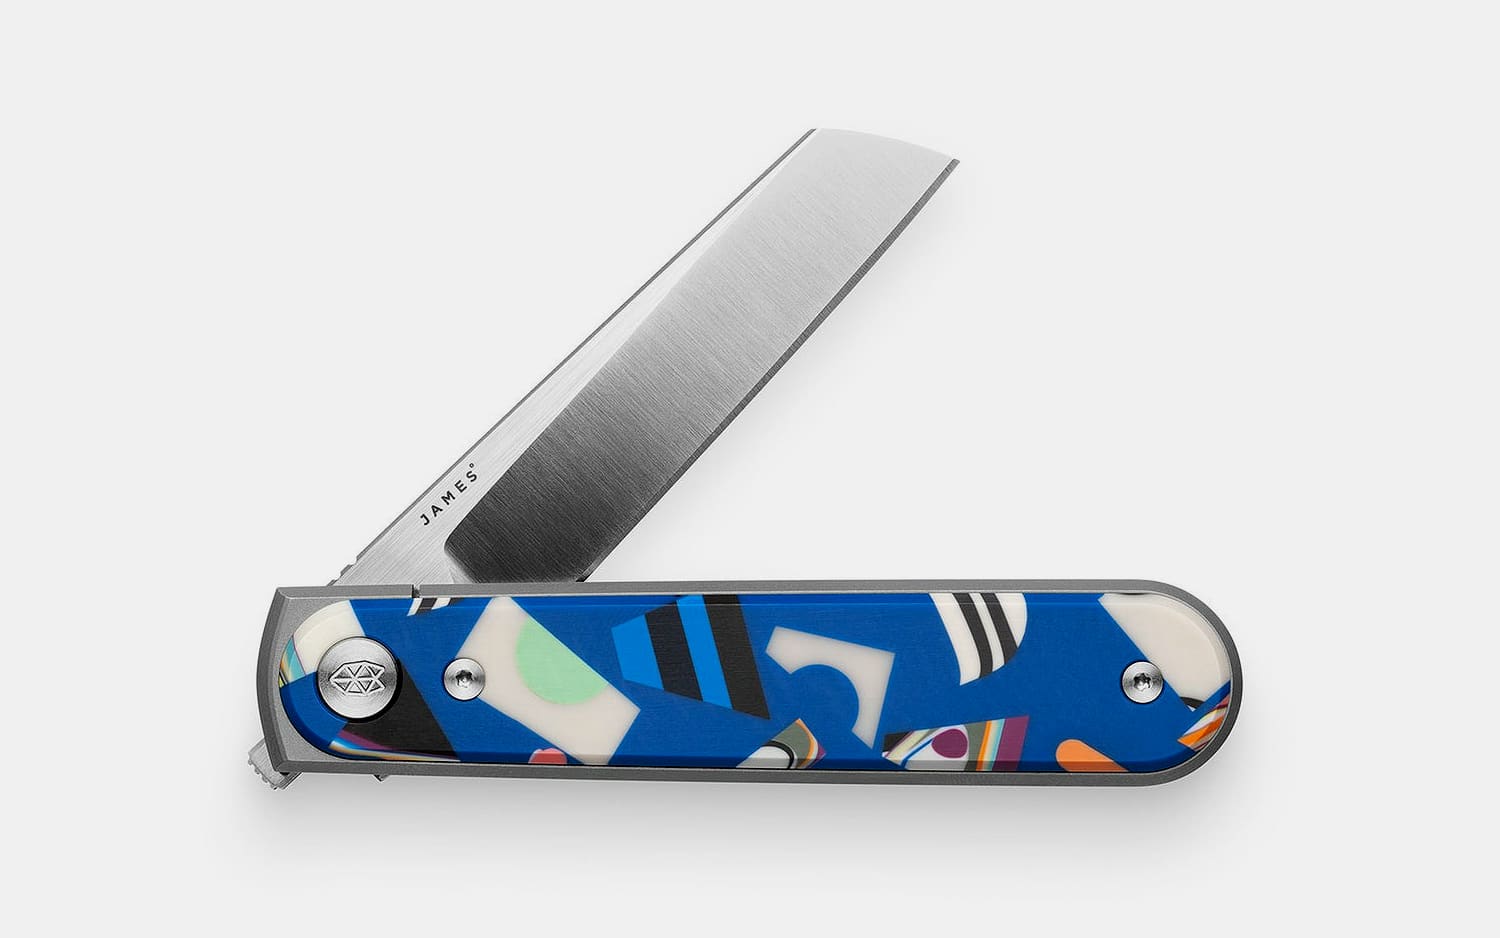 The James Brand x Elyse Graham Duval Pocket Knife